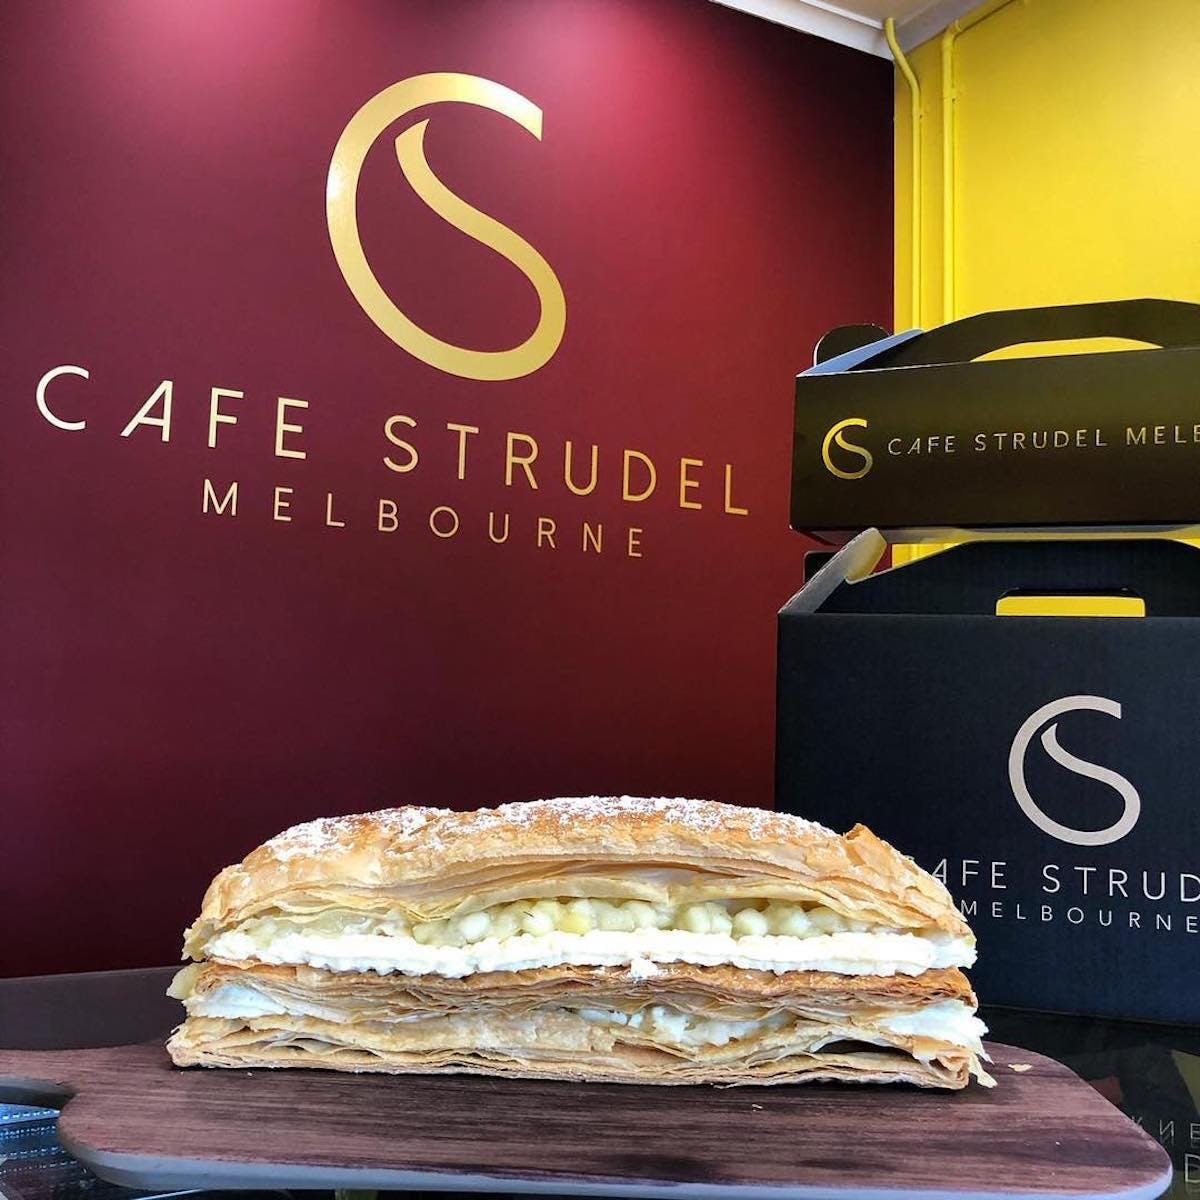 Cafe Strudel Melbourne - Northern Rivers Accommodation